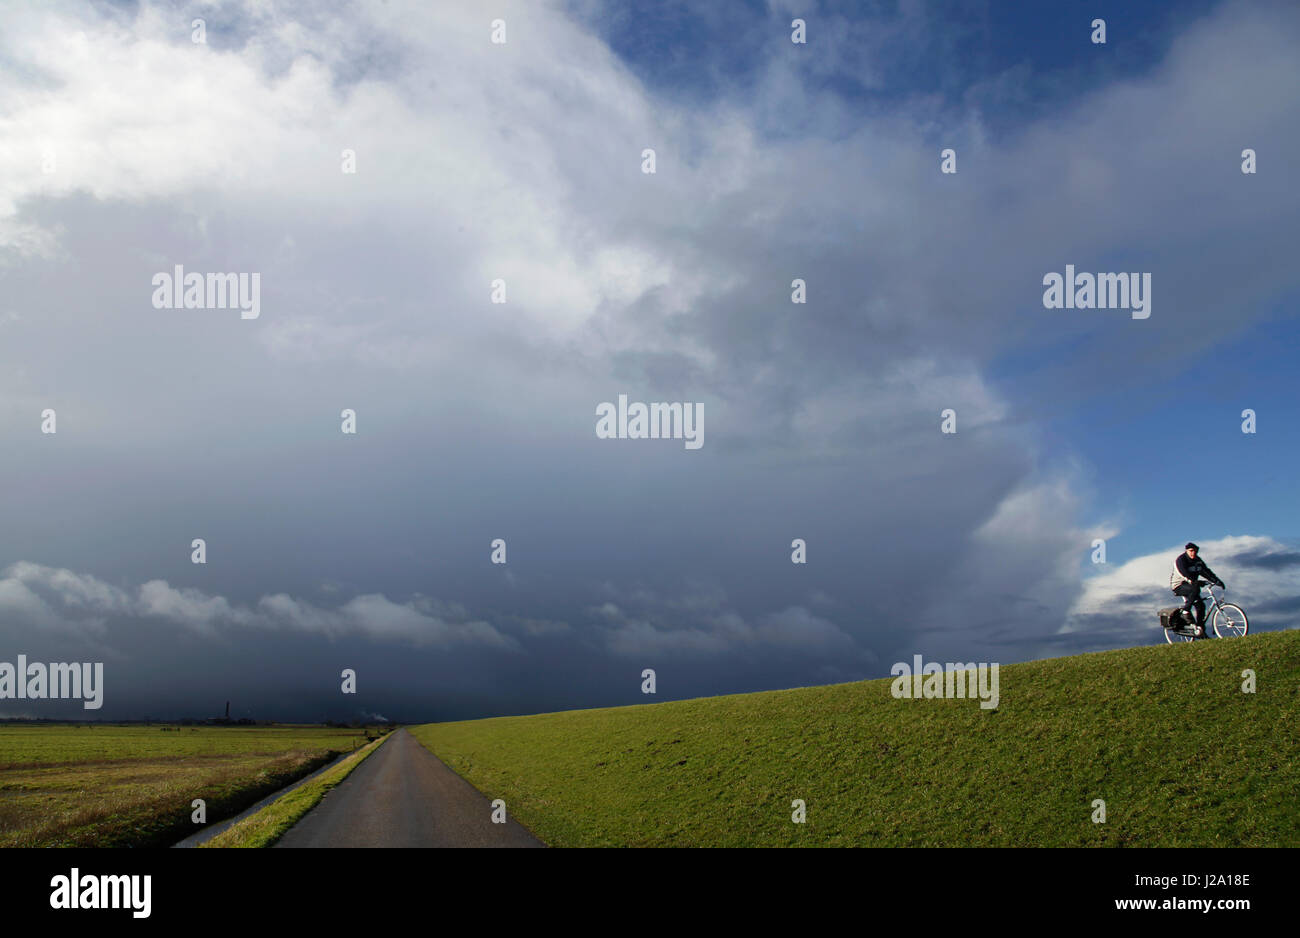 Rain clouds in a polder landscape. Stock Photo